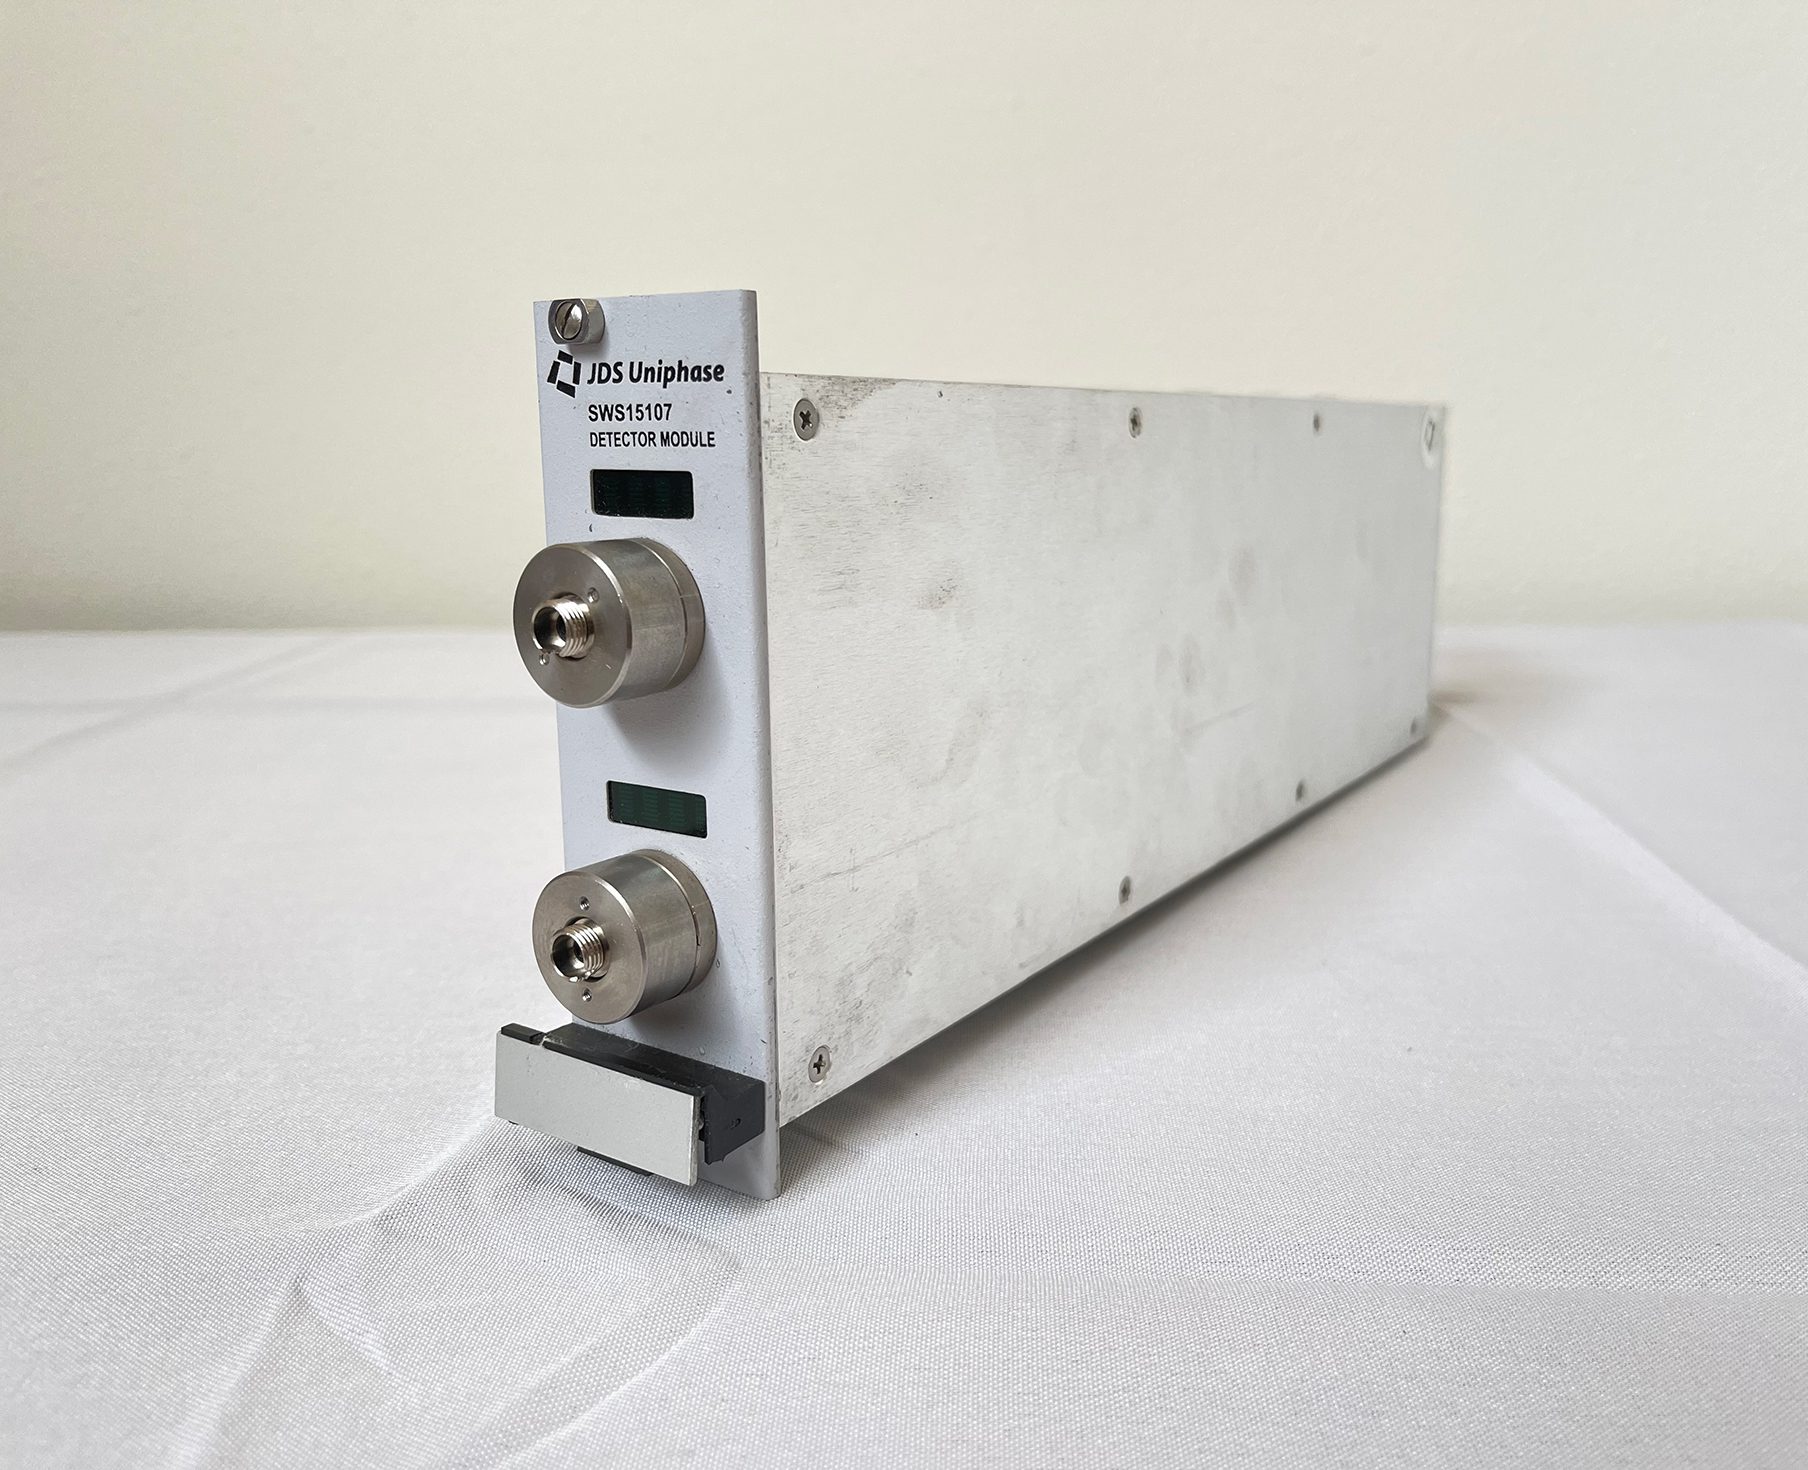 JDSU SWS 15107 Detector Module -61950 For Sale